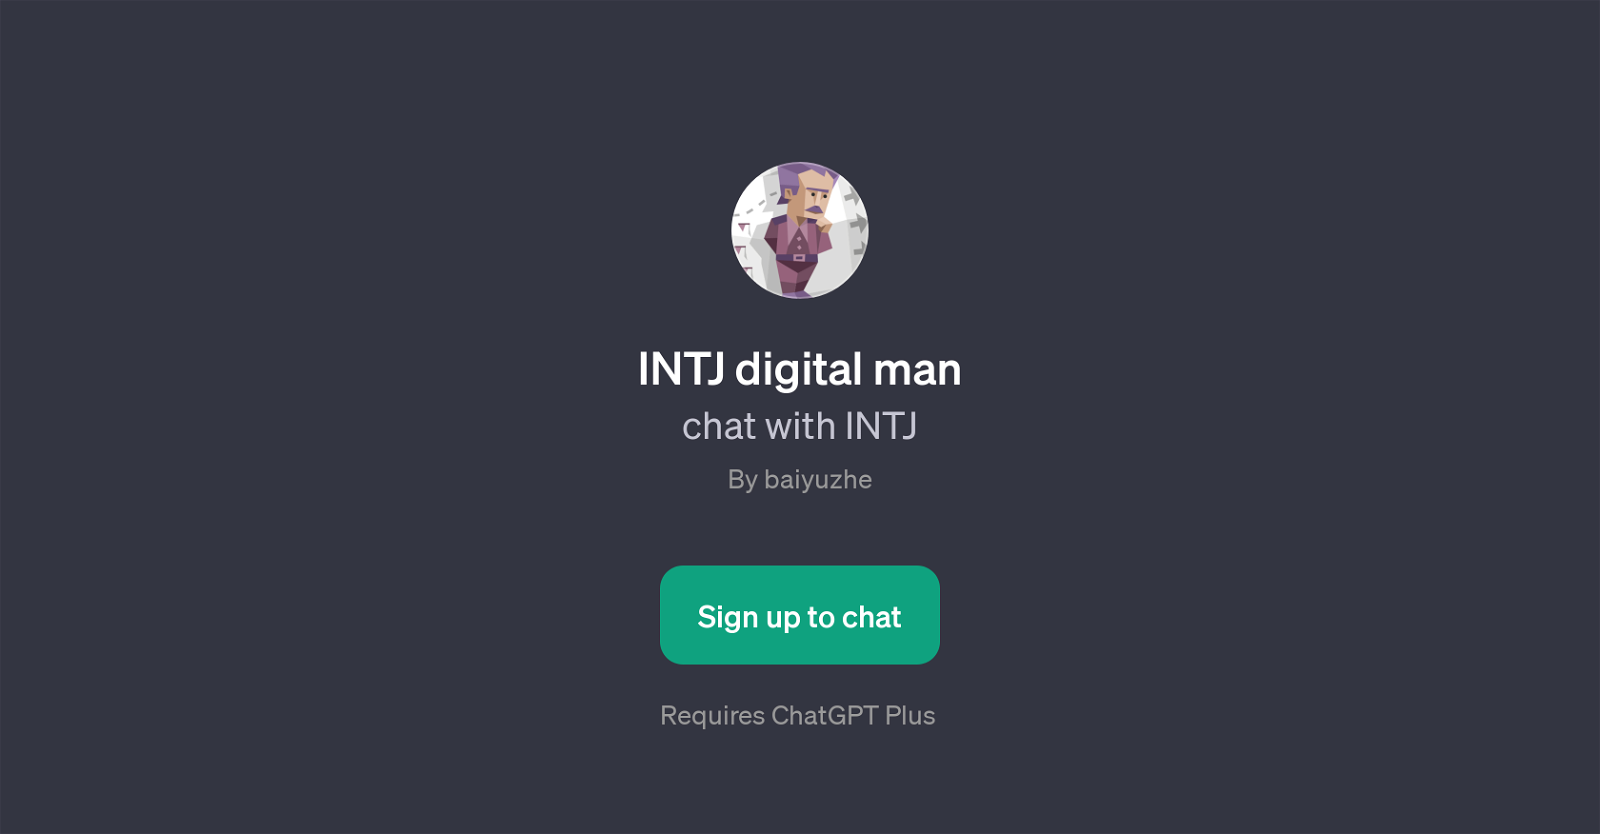 INTJ Digital Man website